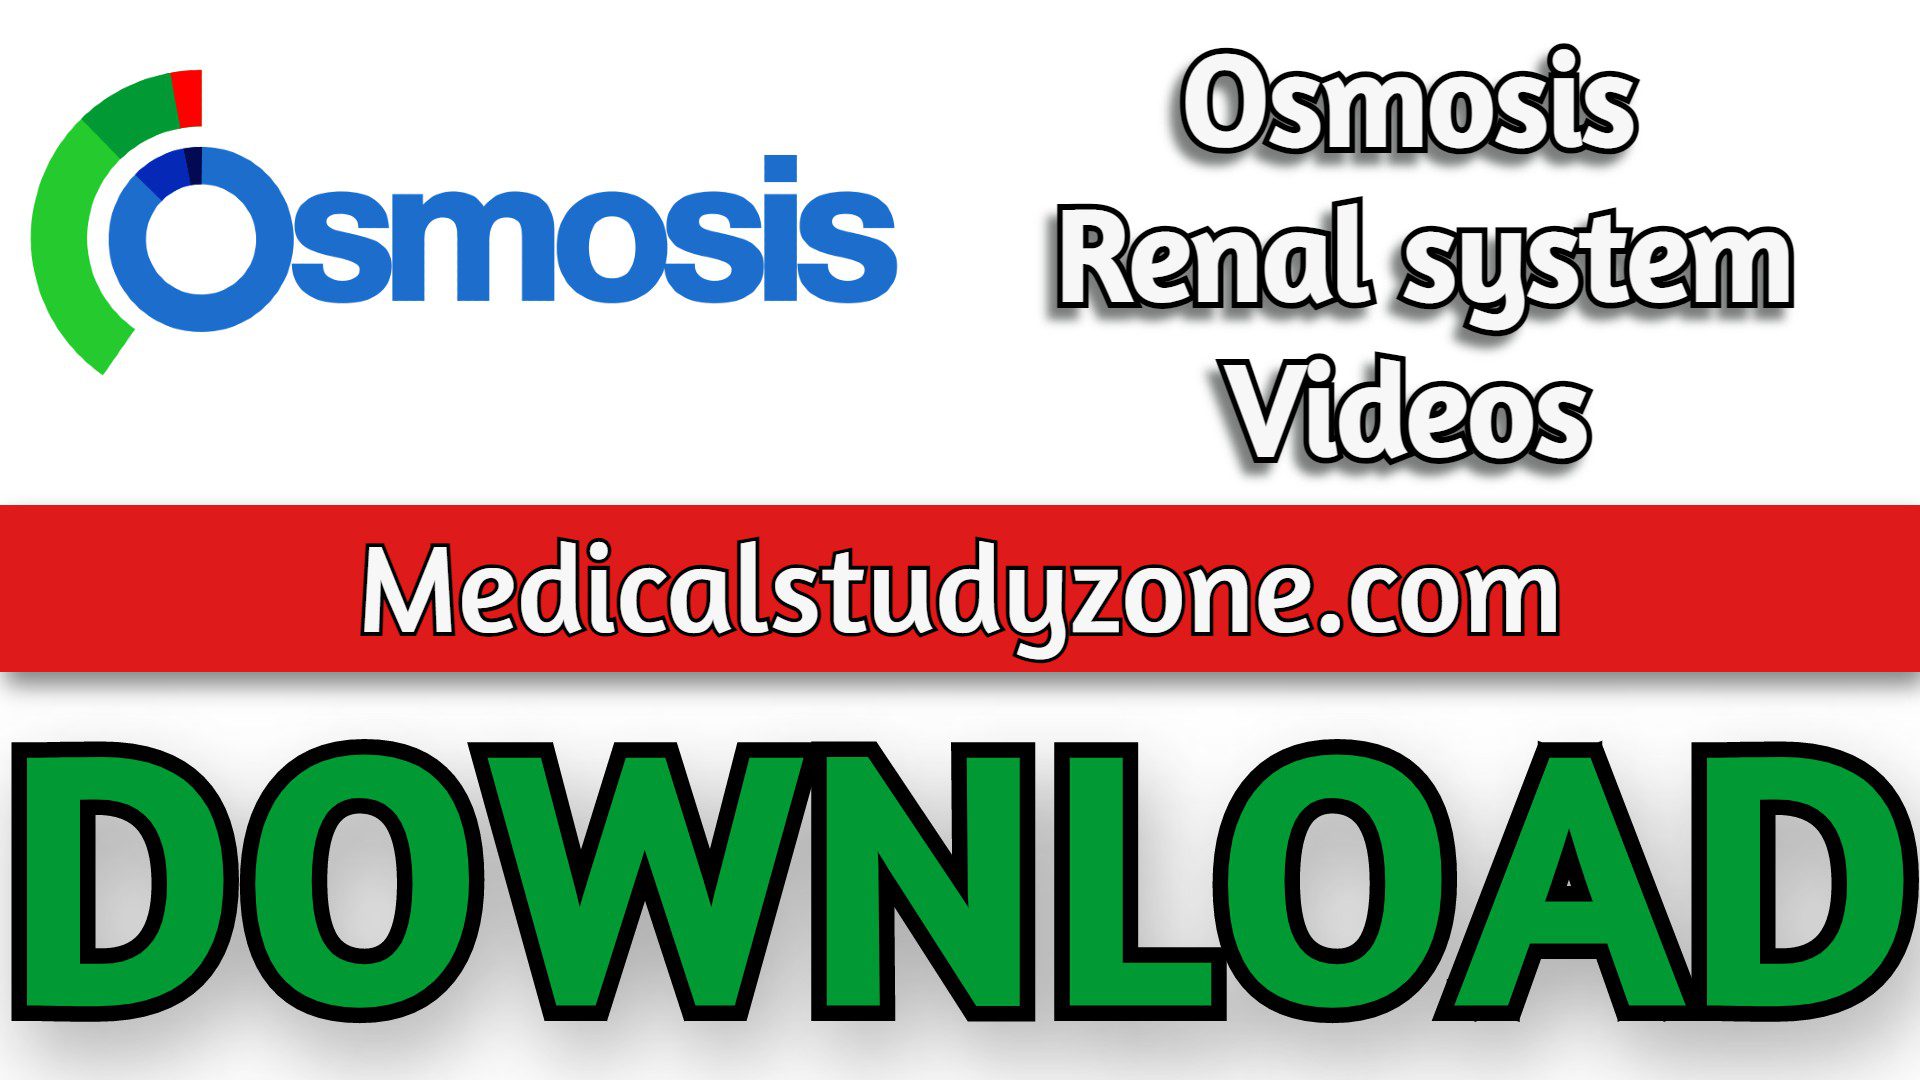 Osmosis Renal system Videos 2022 Free Download